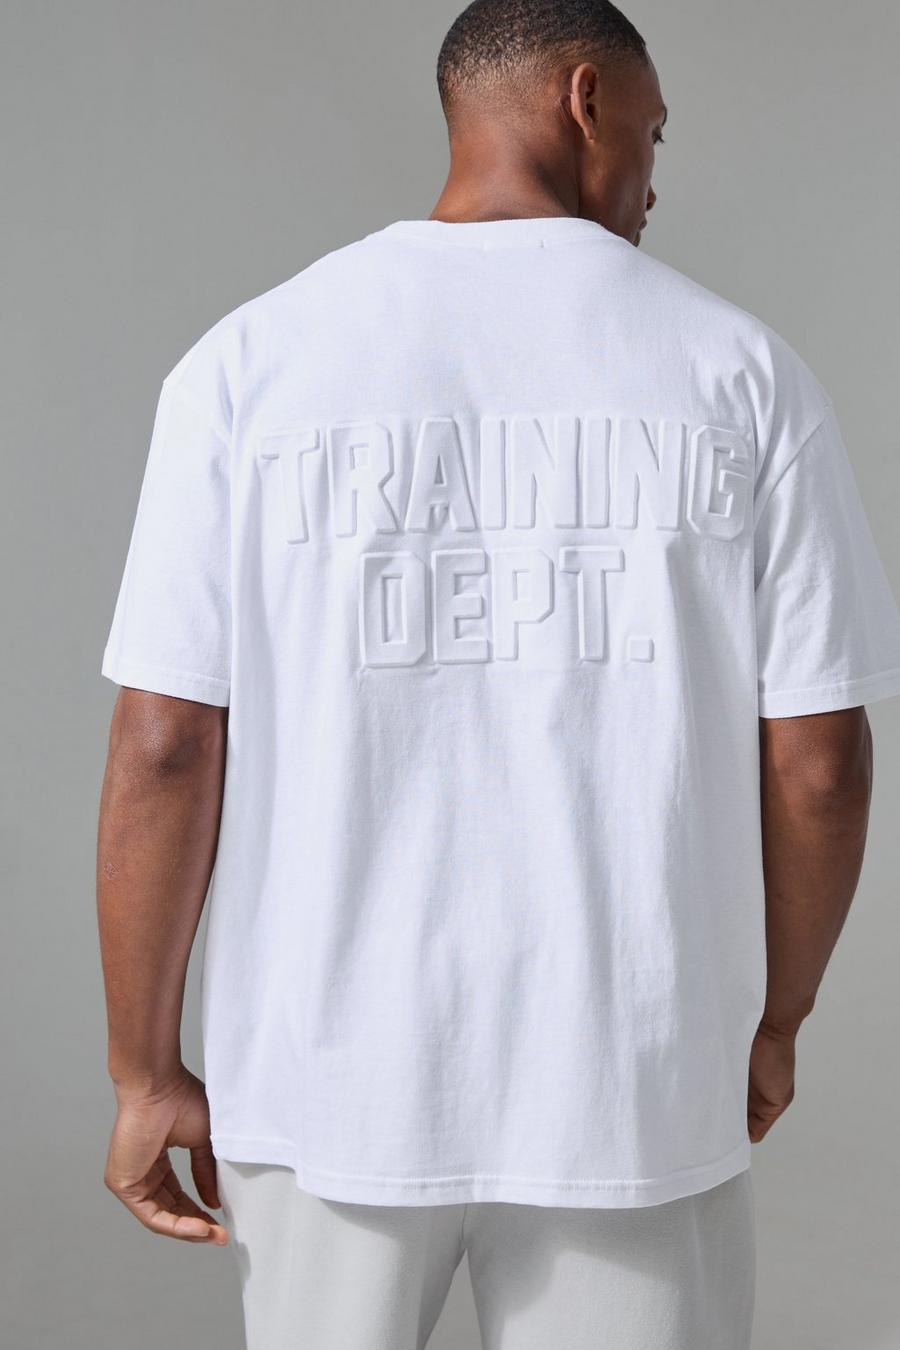 T-shirt oversize Man Acitve Training Dept con incisioni, White